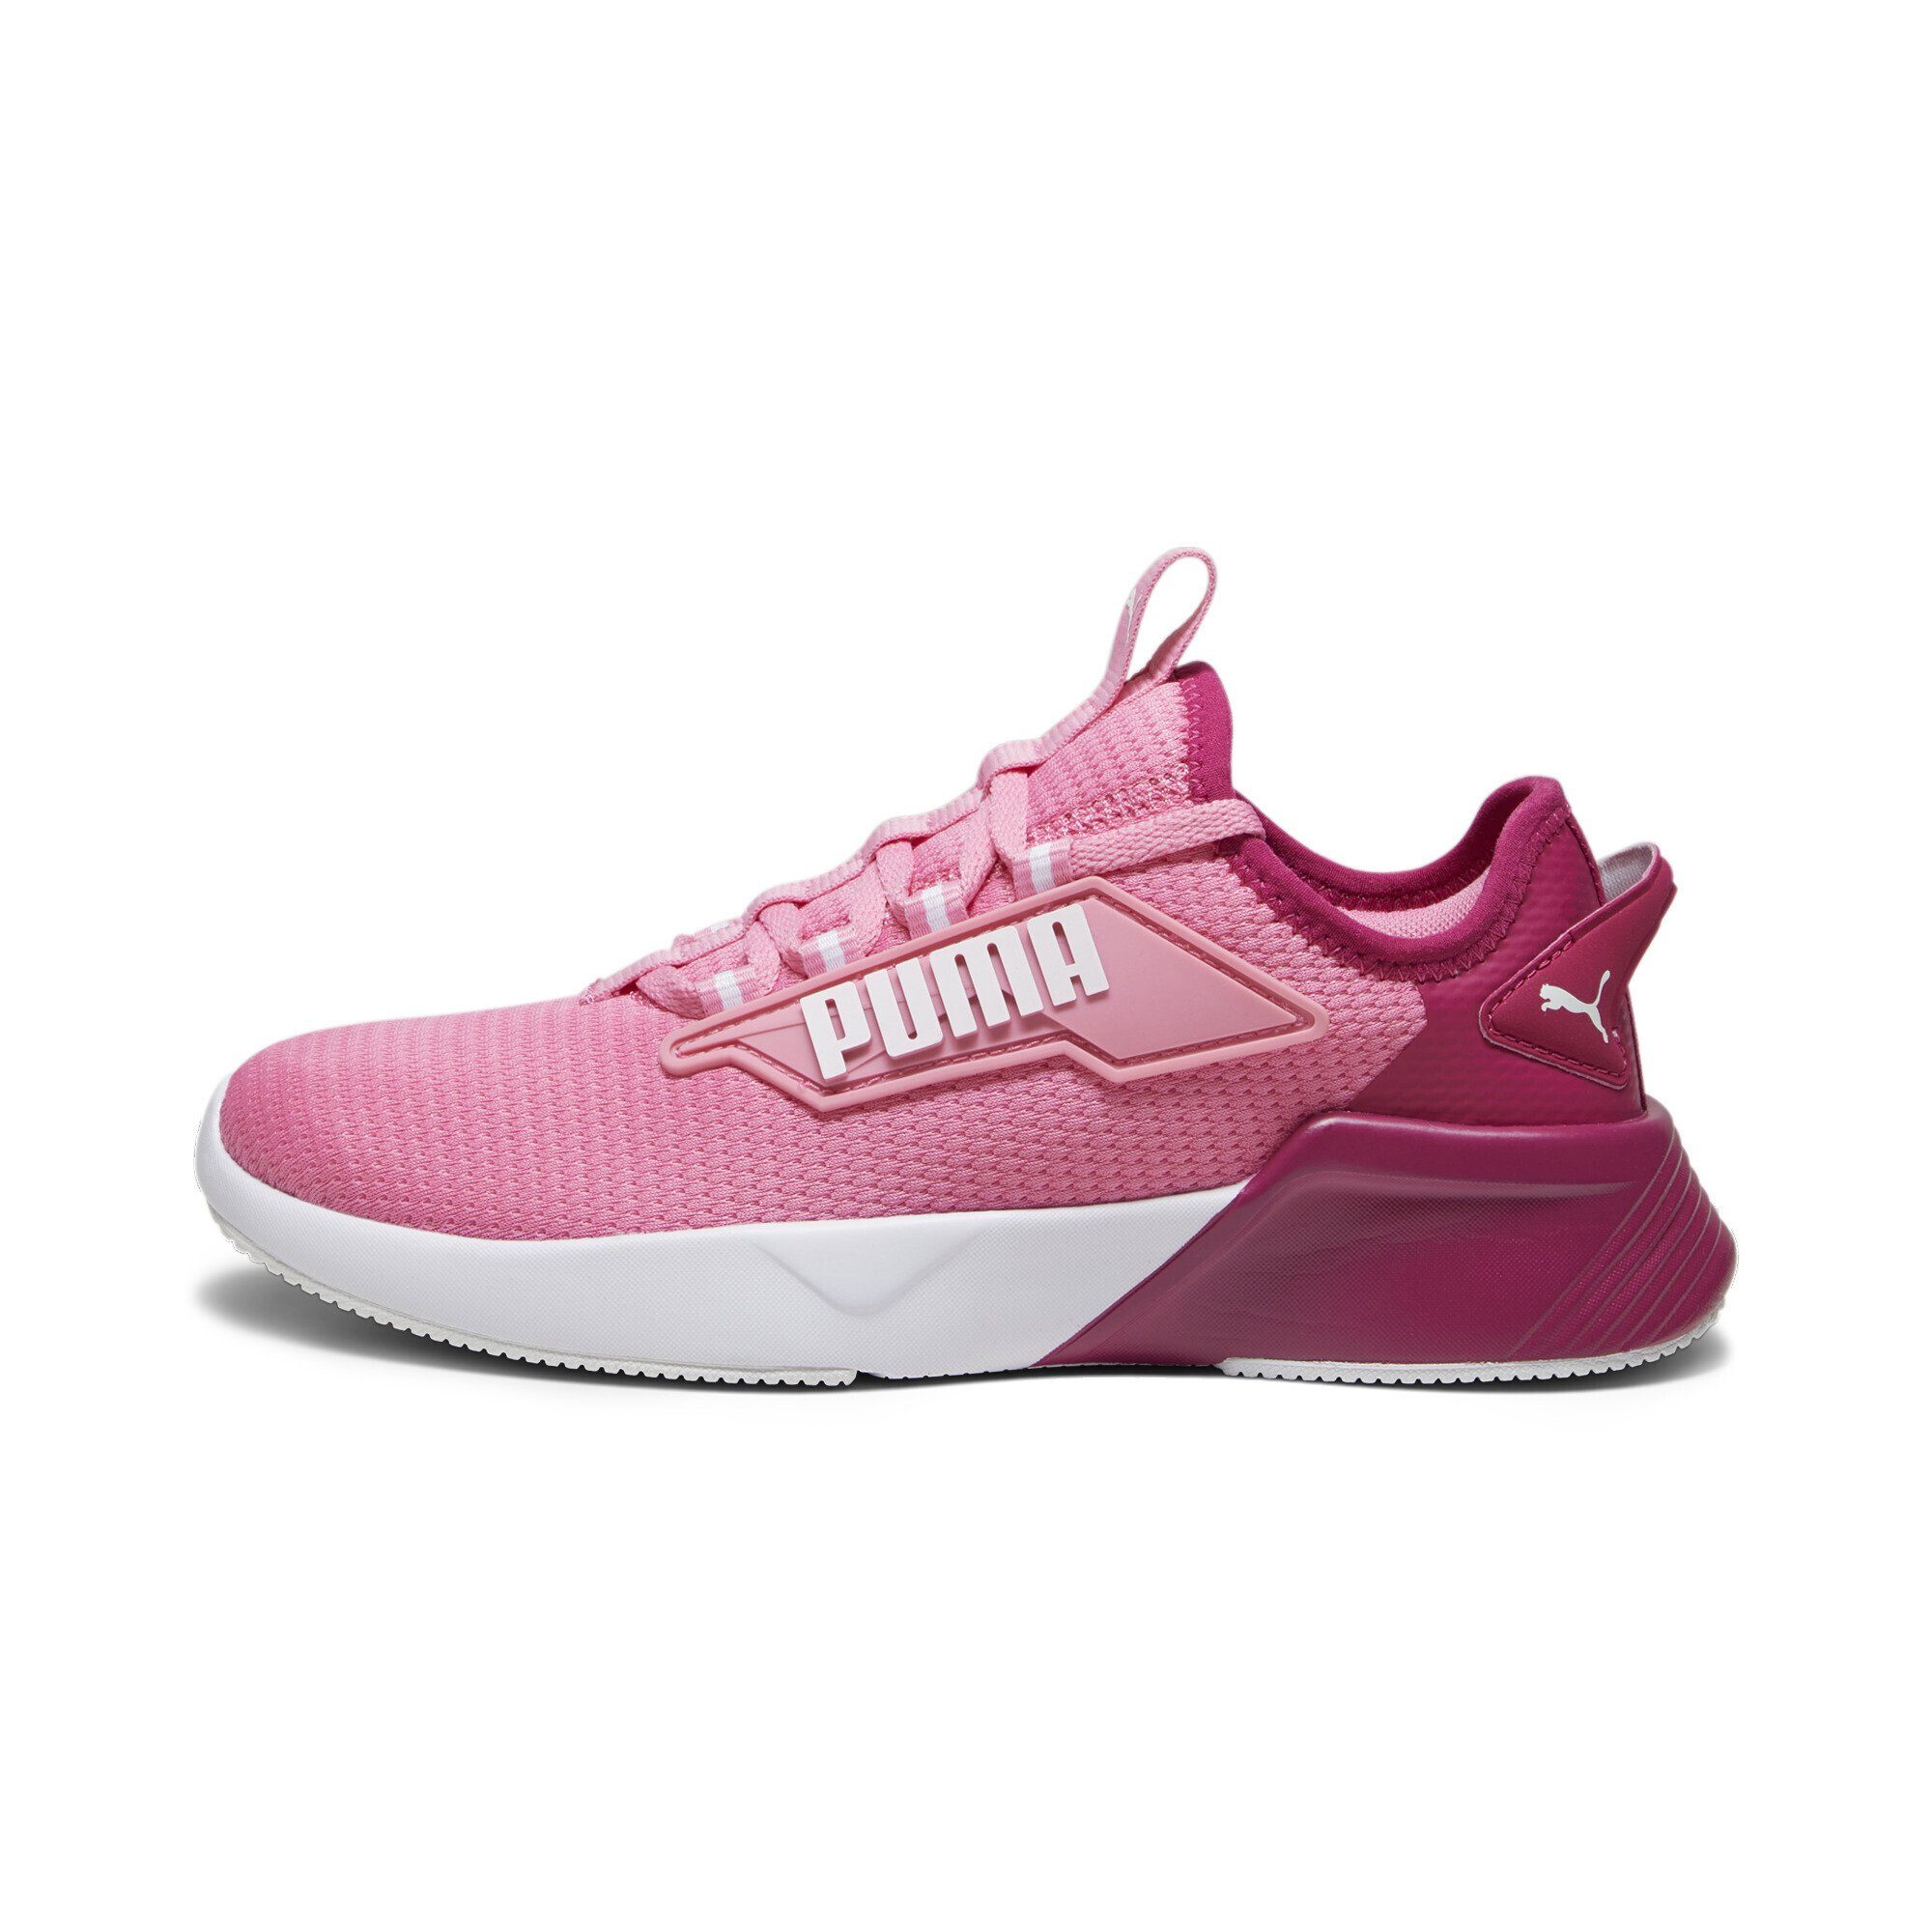 Strawberry Sneakers PUMA 2 White Jugendliche Laufschuh Pink Burst Retaliate Pinktastic